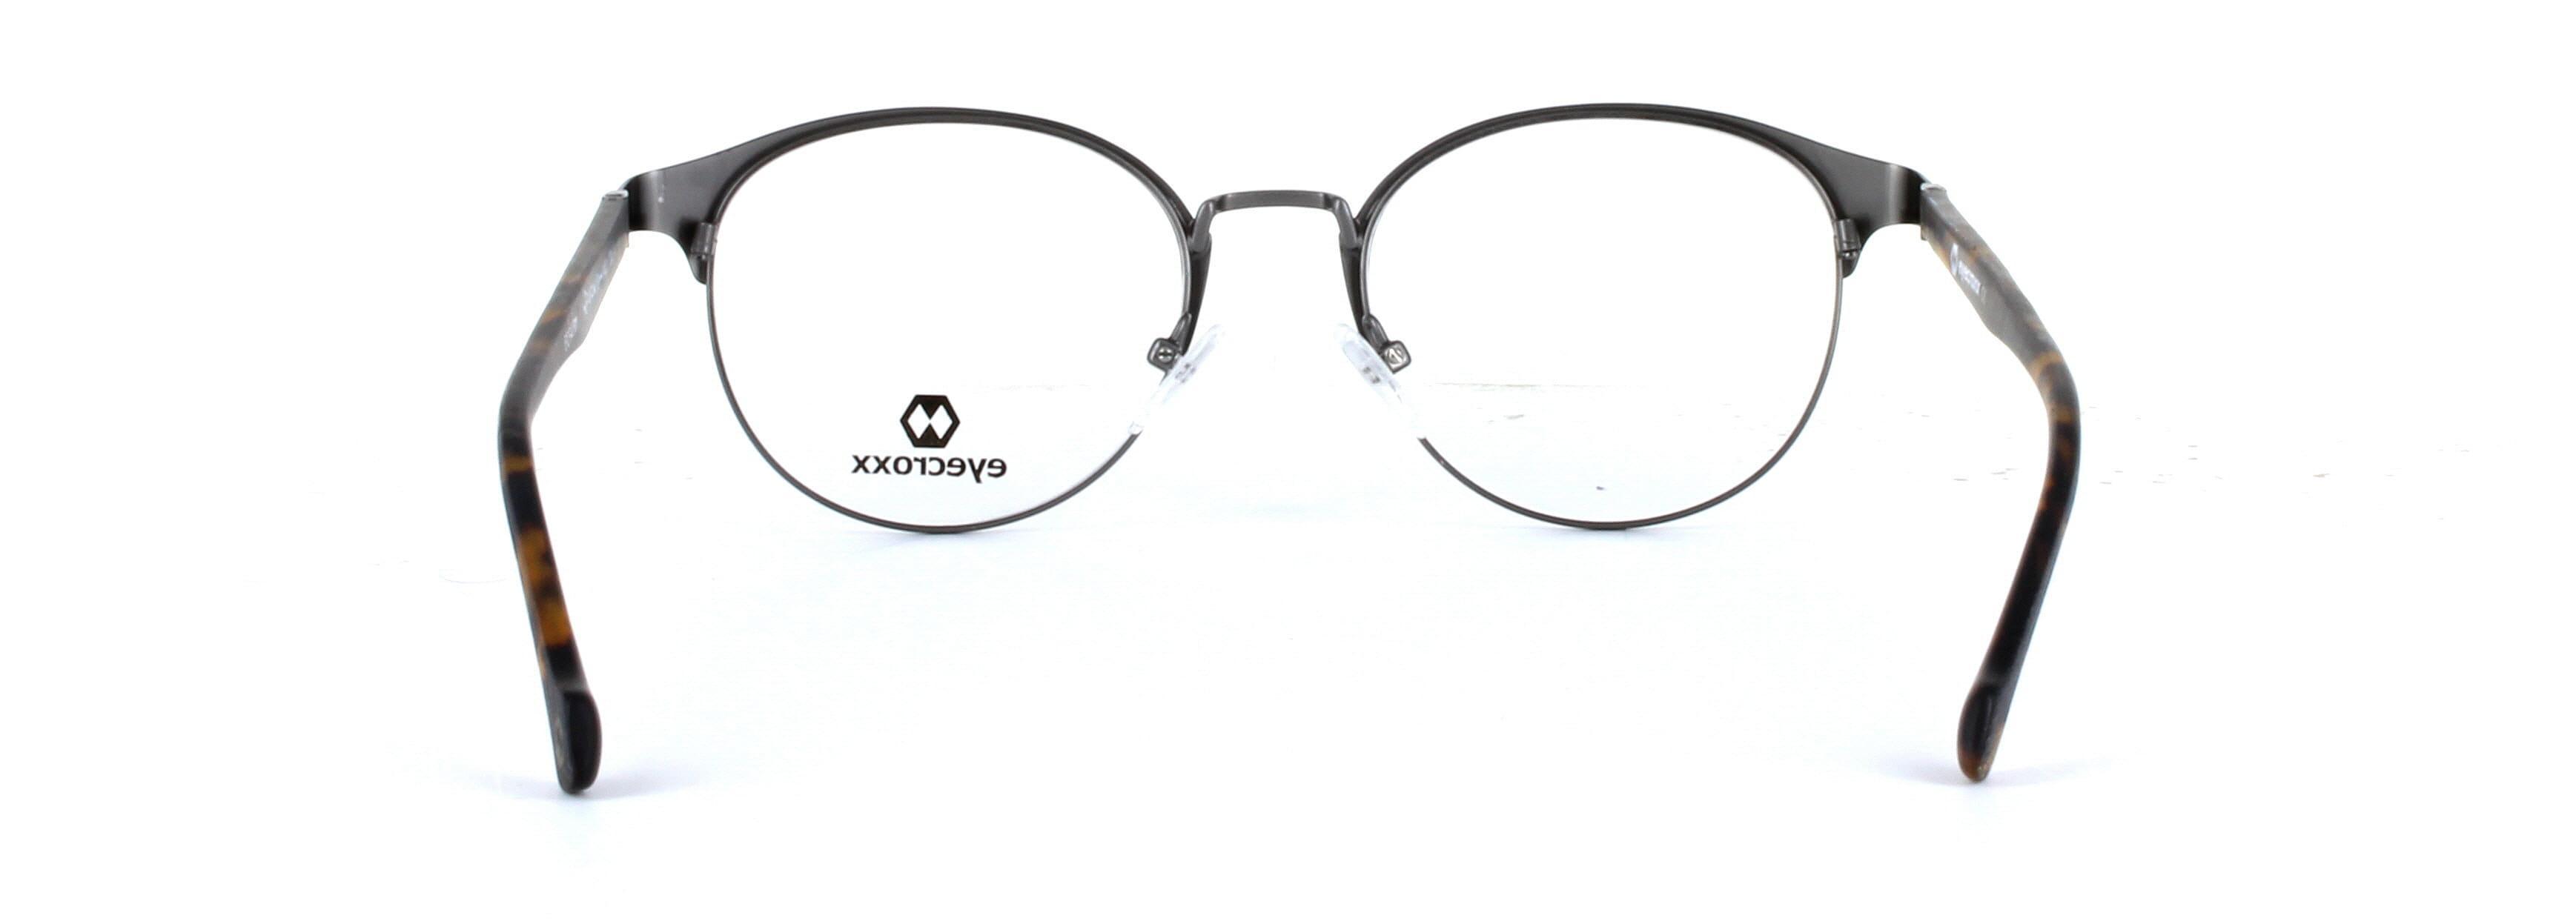 Eyecroxx 543-C4 Black Full Rim Round Metal Glasses - Image View 3